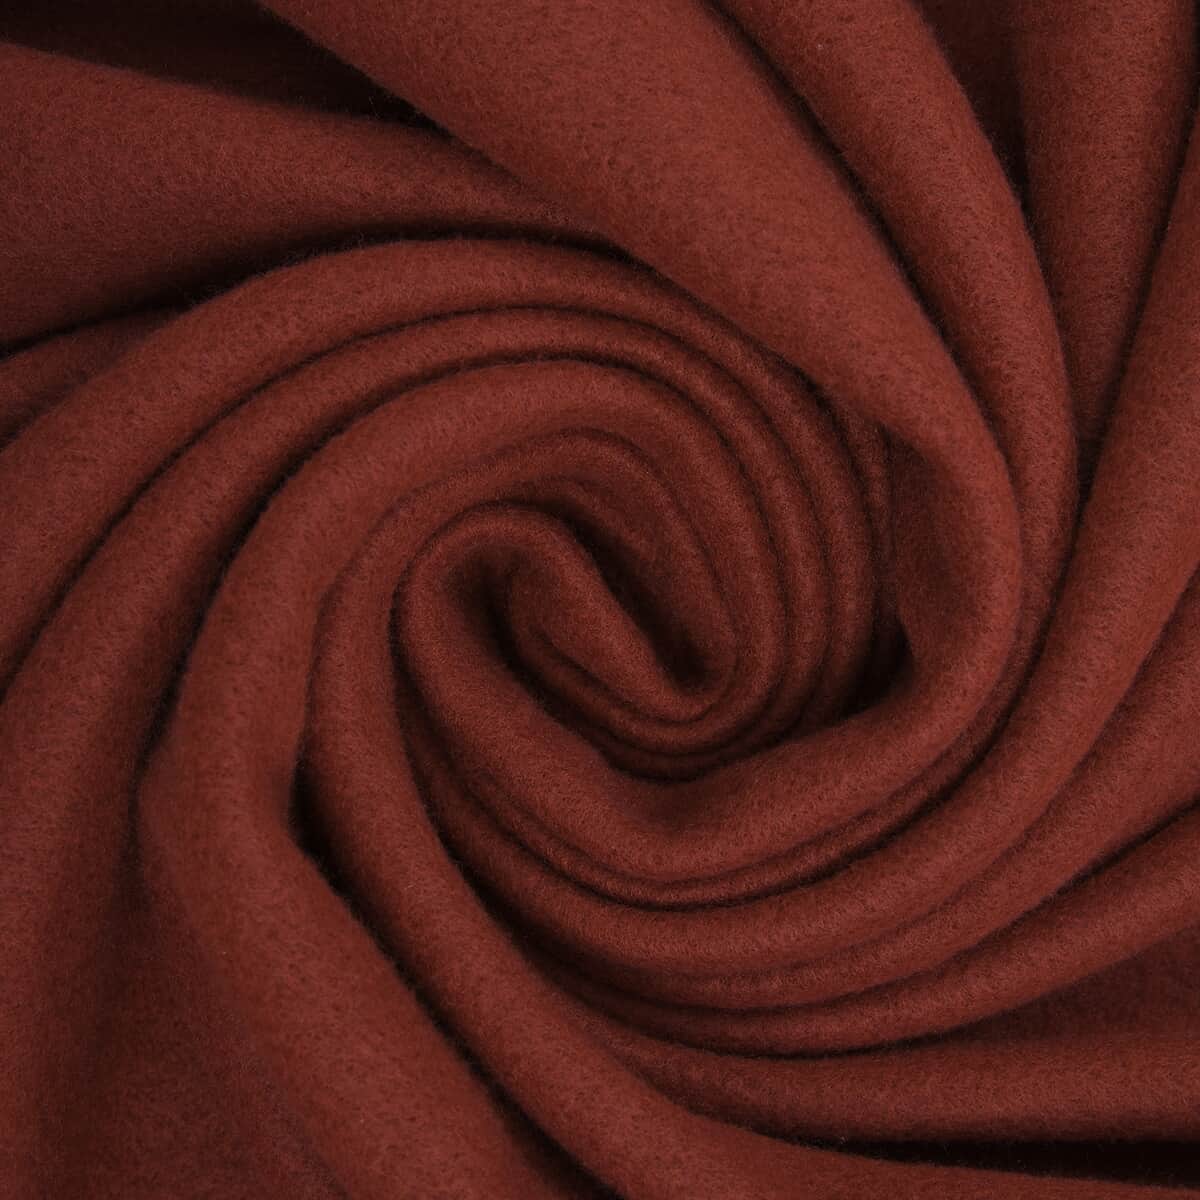 HOMESMART 2 in 1 Red Solid Fleece Travel Blanket (51"X67") with Folded Storage Pocket (Microfiber) image number 5